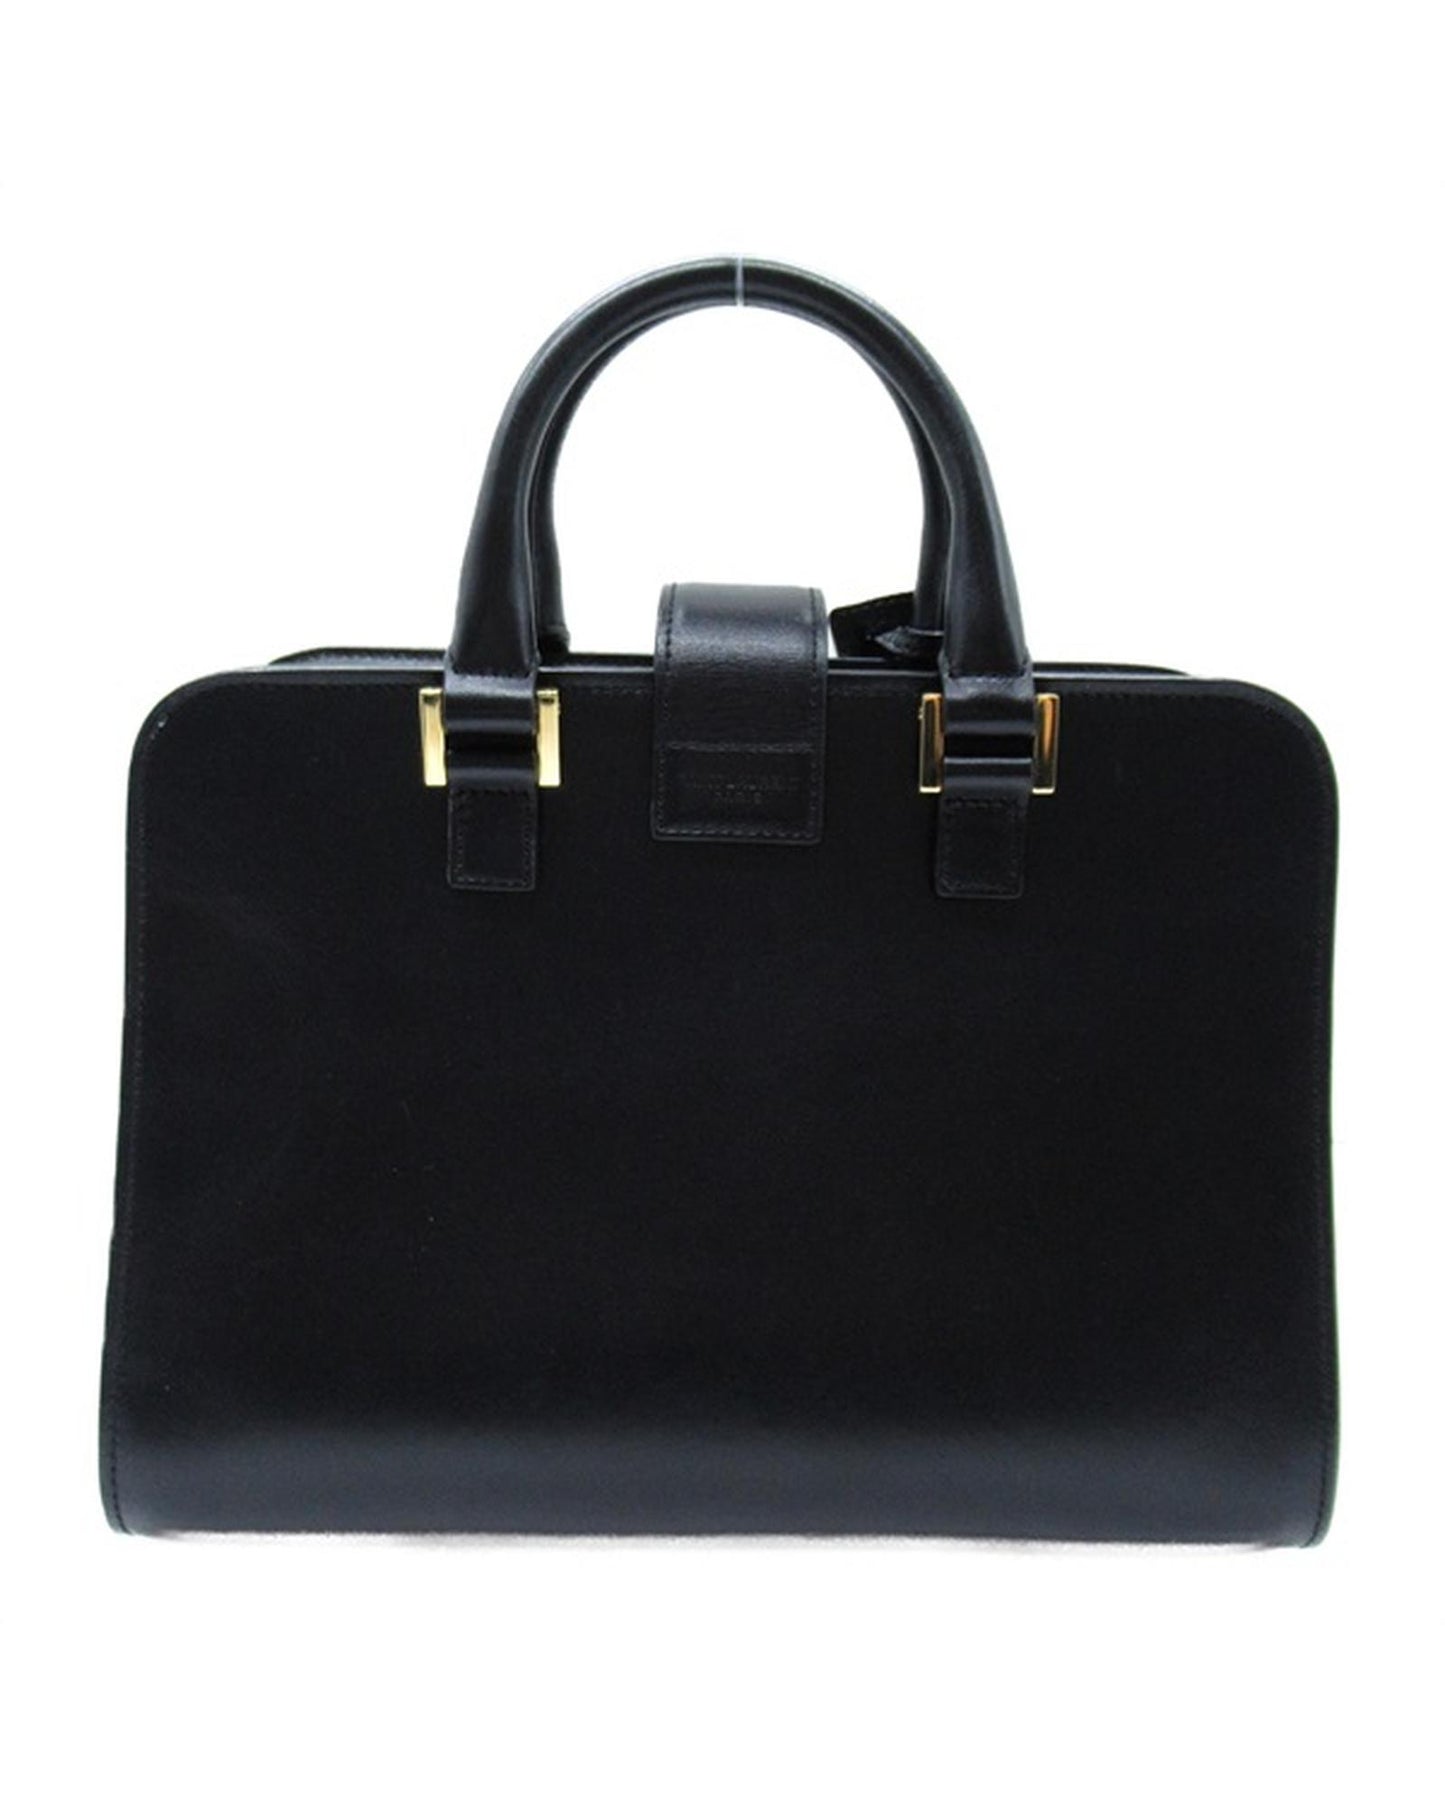 Yves Saint Laurent Women's Black Leather Monogram Baby Cabas Bag - Excellent Condition in Black